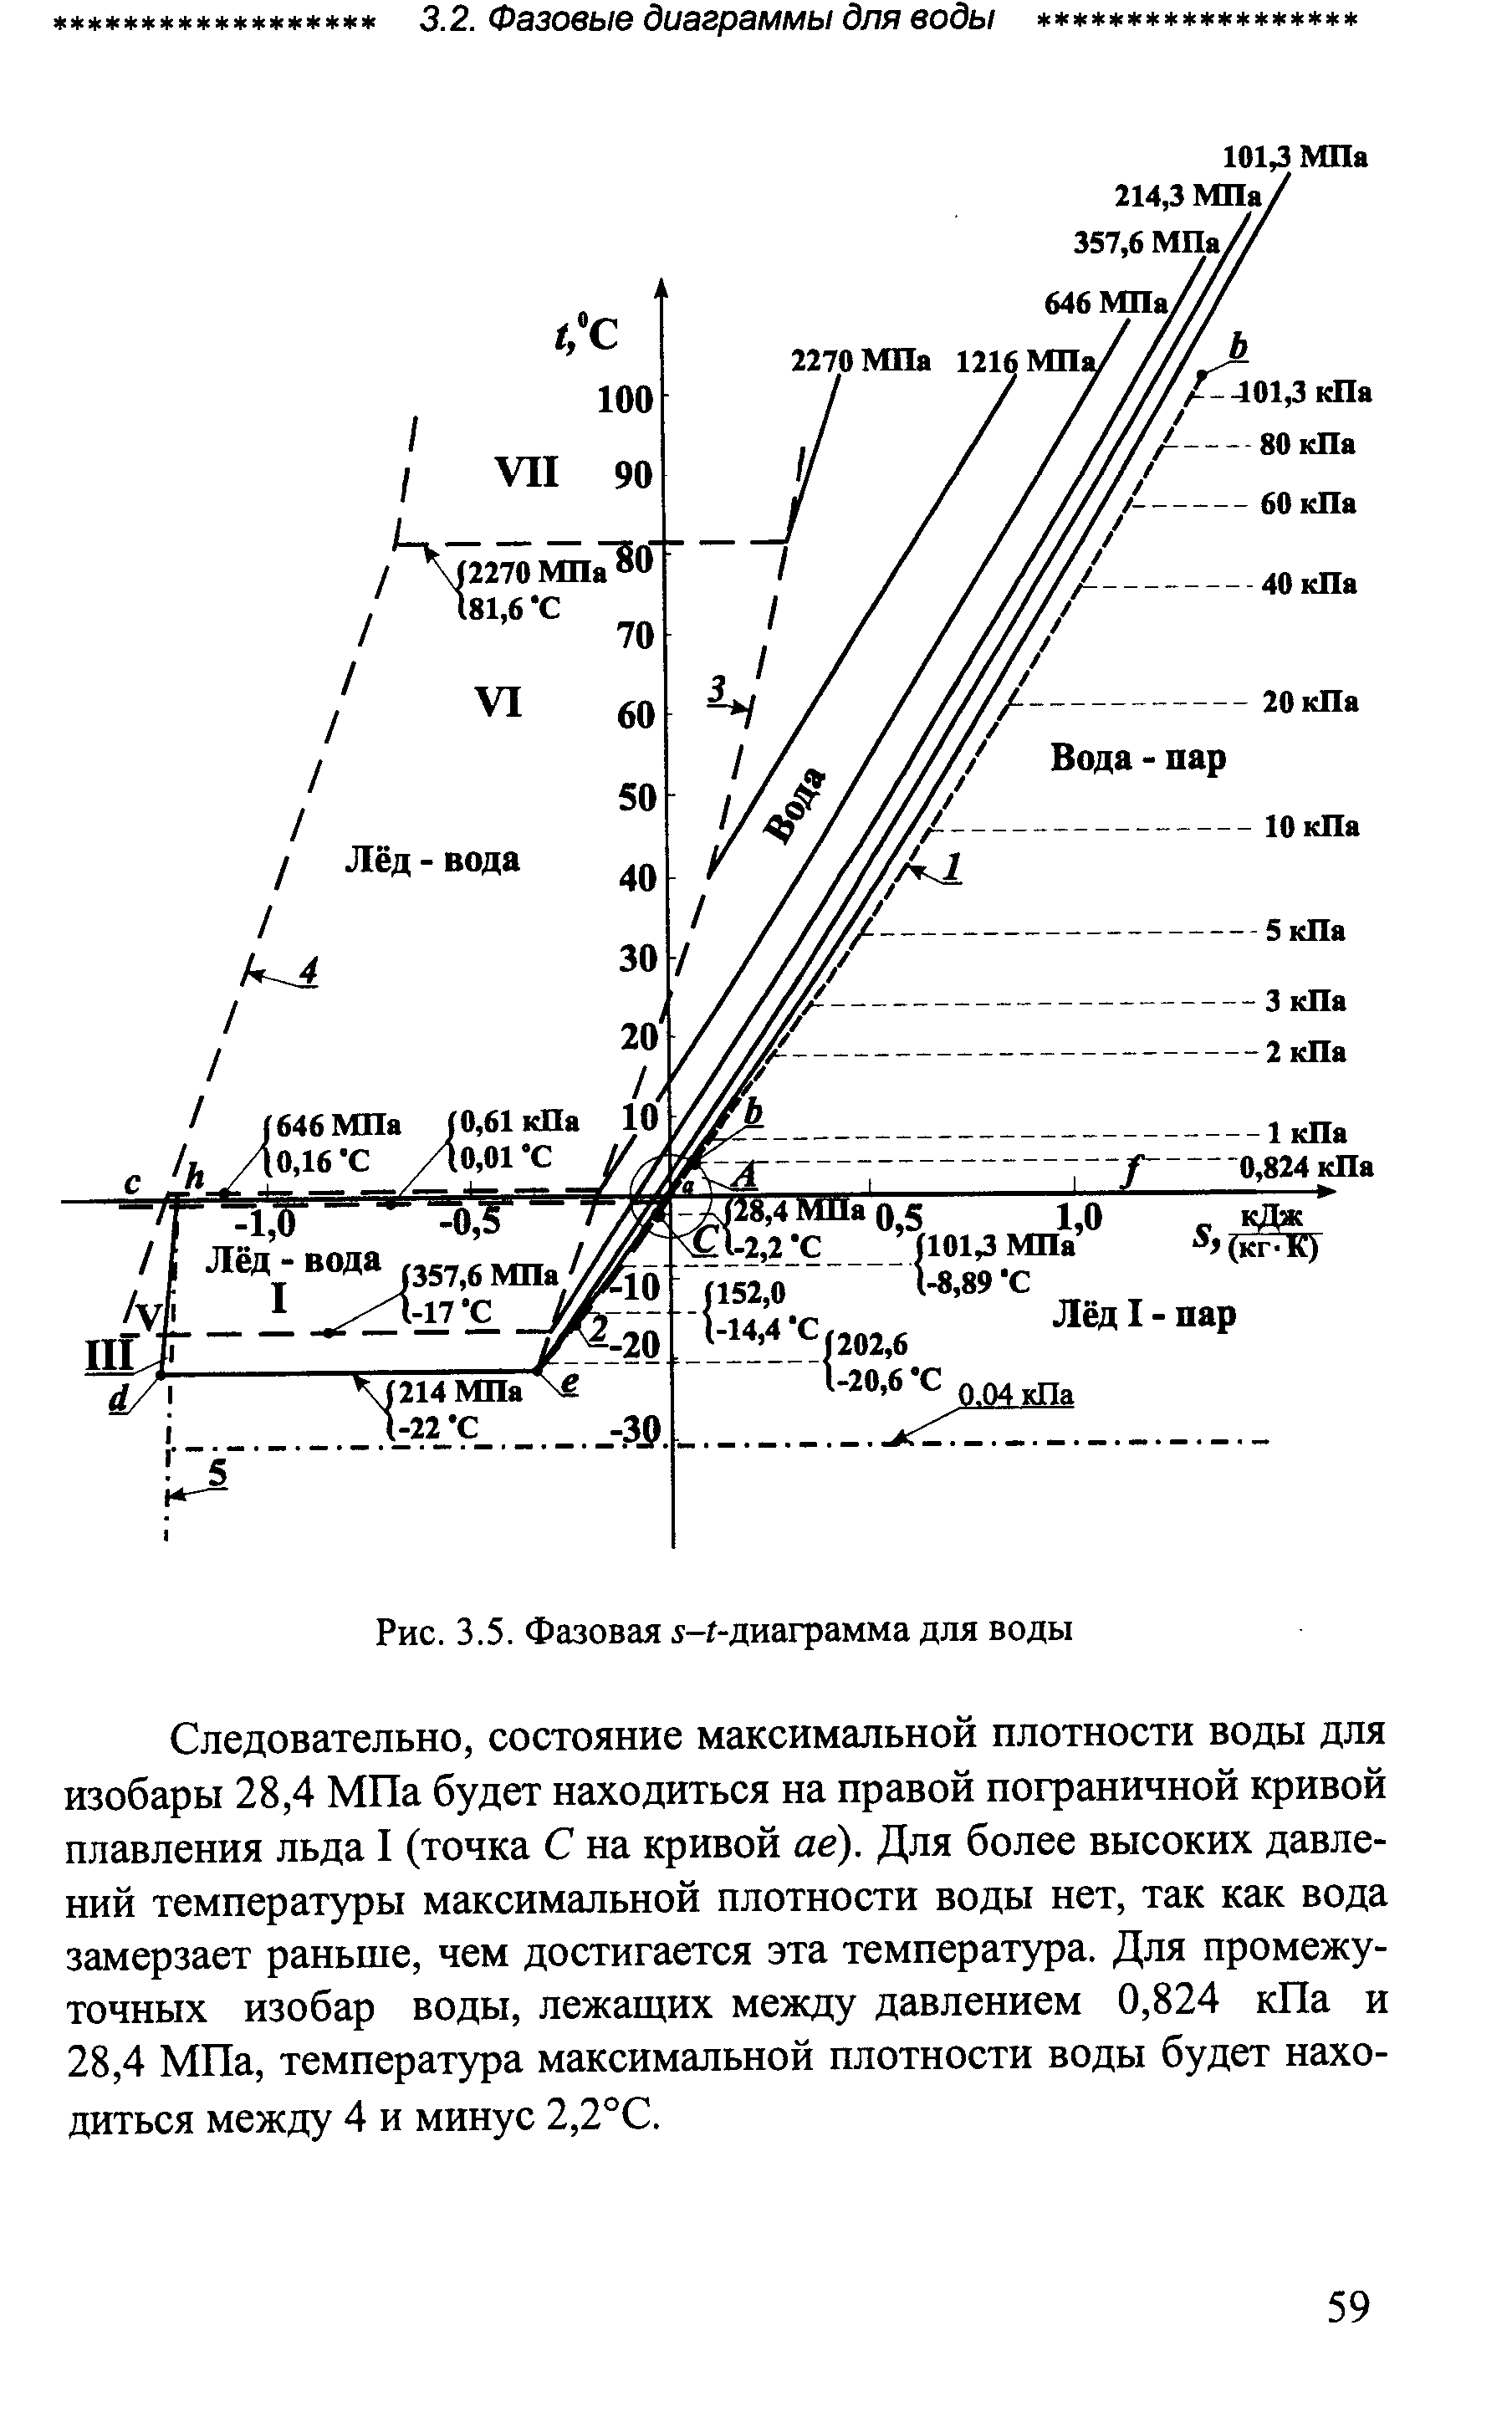 Рис. 3.5. Фазовая 5-г-диаграмма для воды
